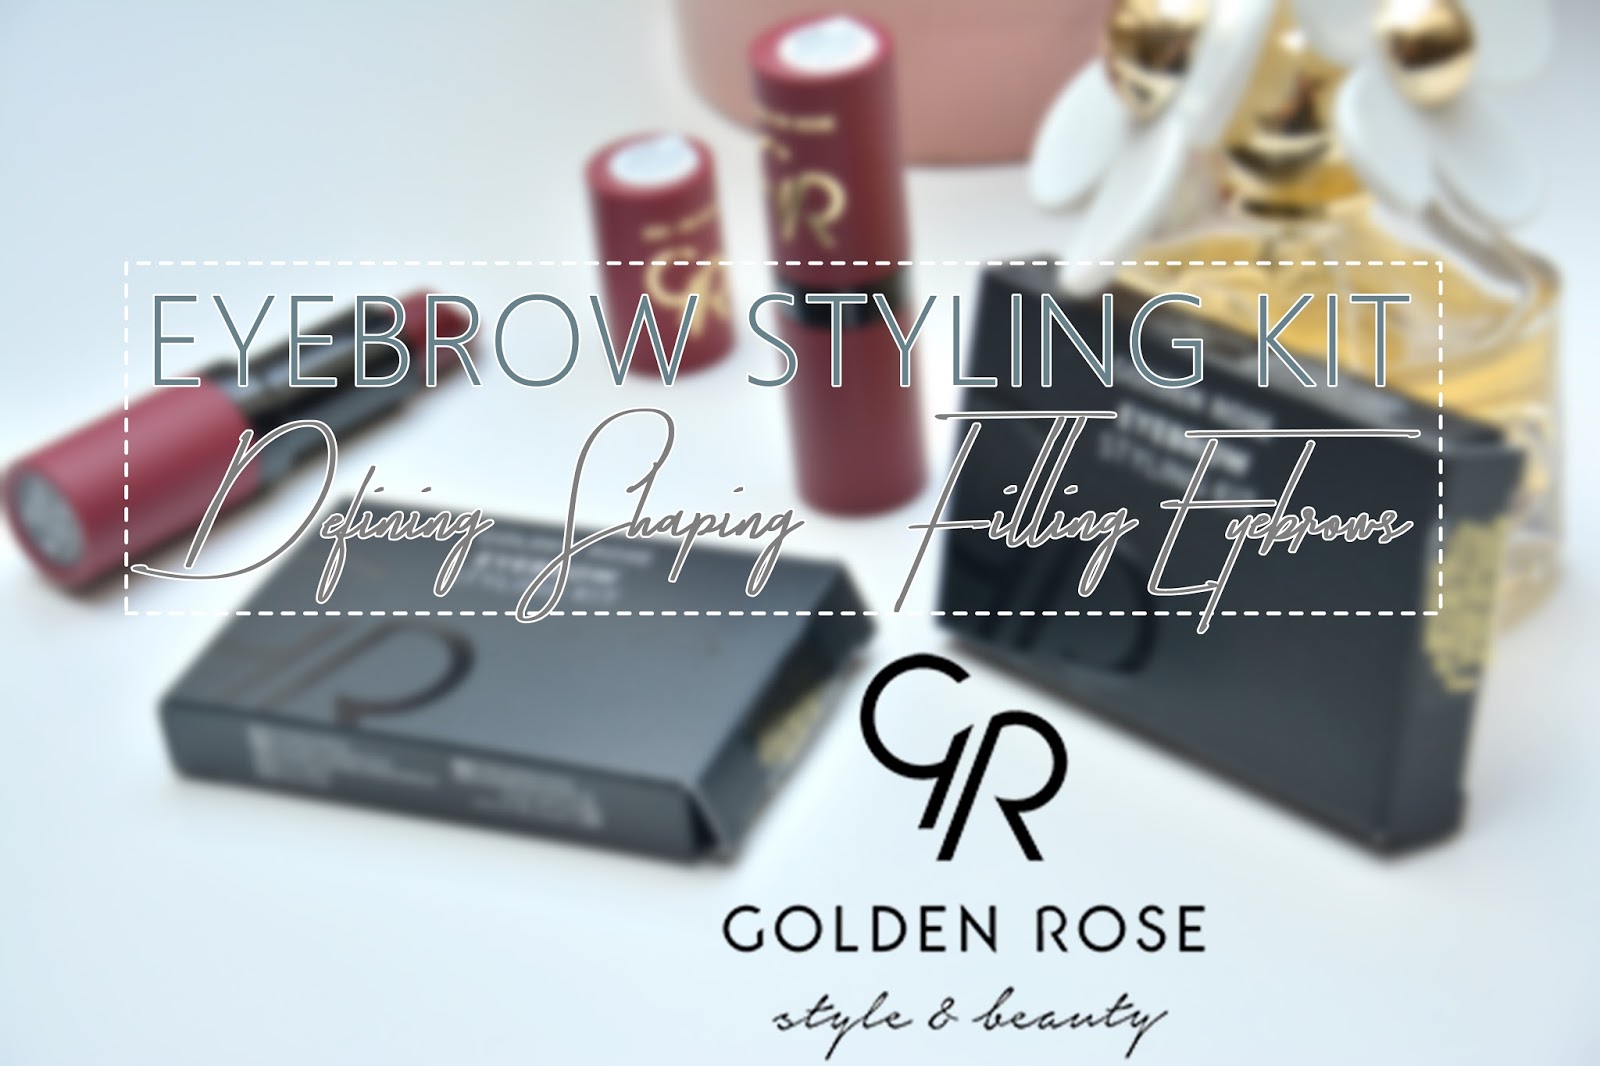 IMAGINE DAY | Sara Sycz: Golden Rose eyebrow styling kit